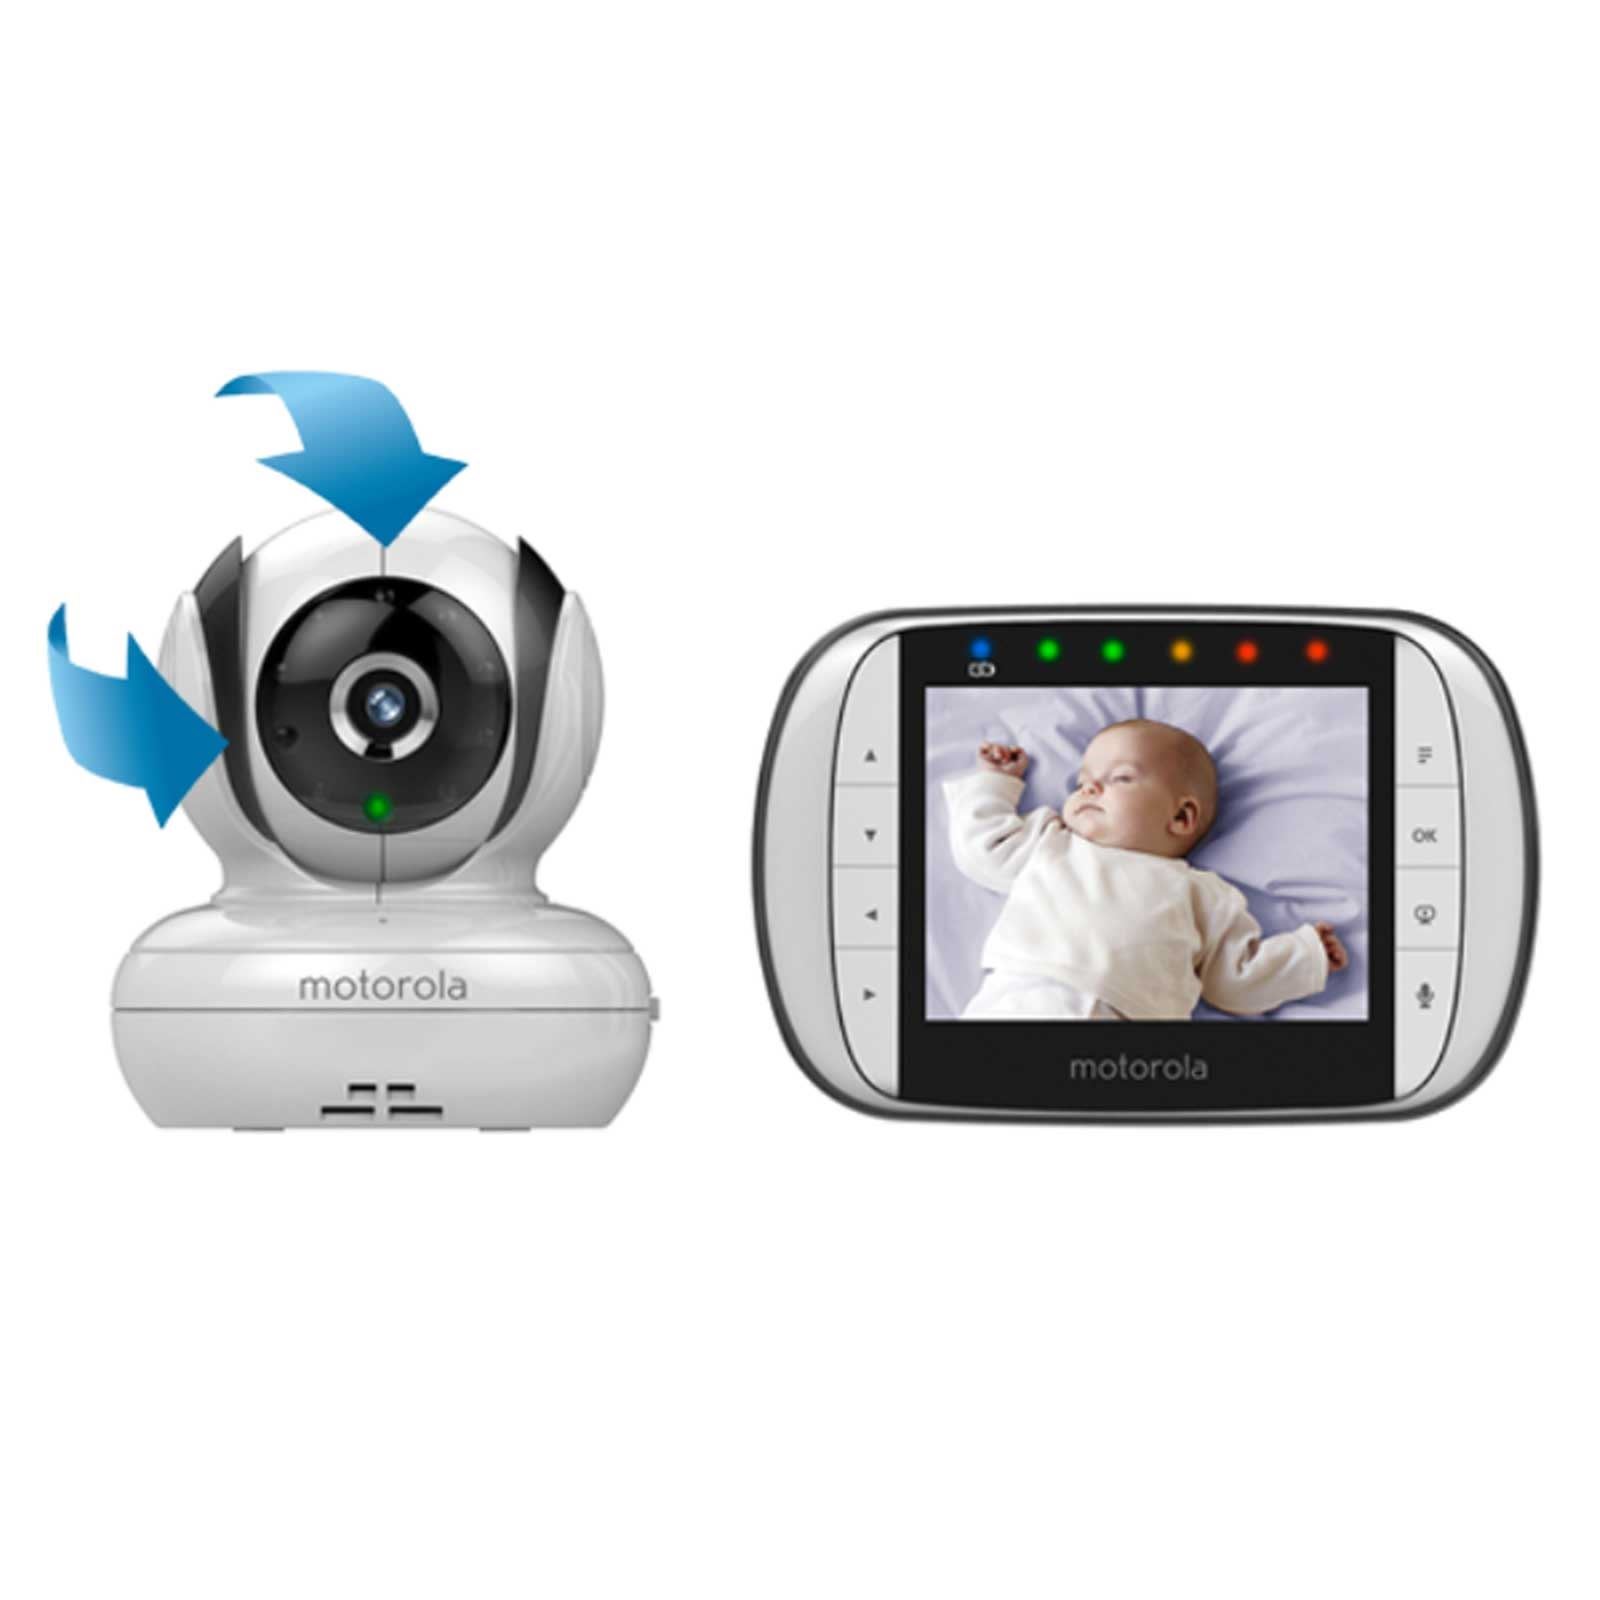 Motorola MBP 36S 3.5 İnç LCDEkran Dijital Bebek Kamerası